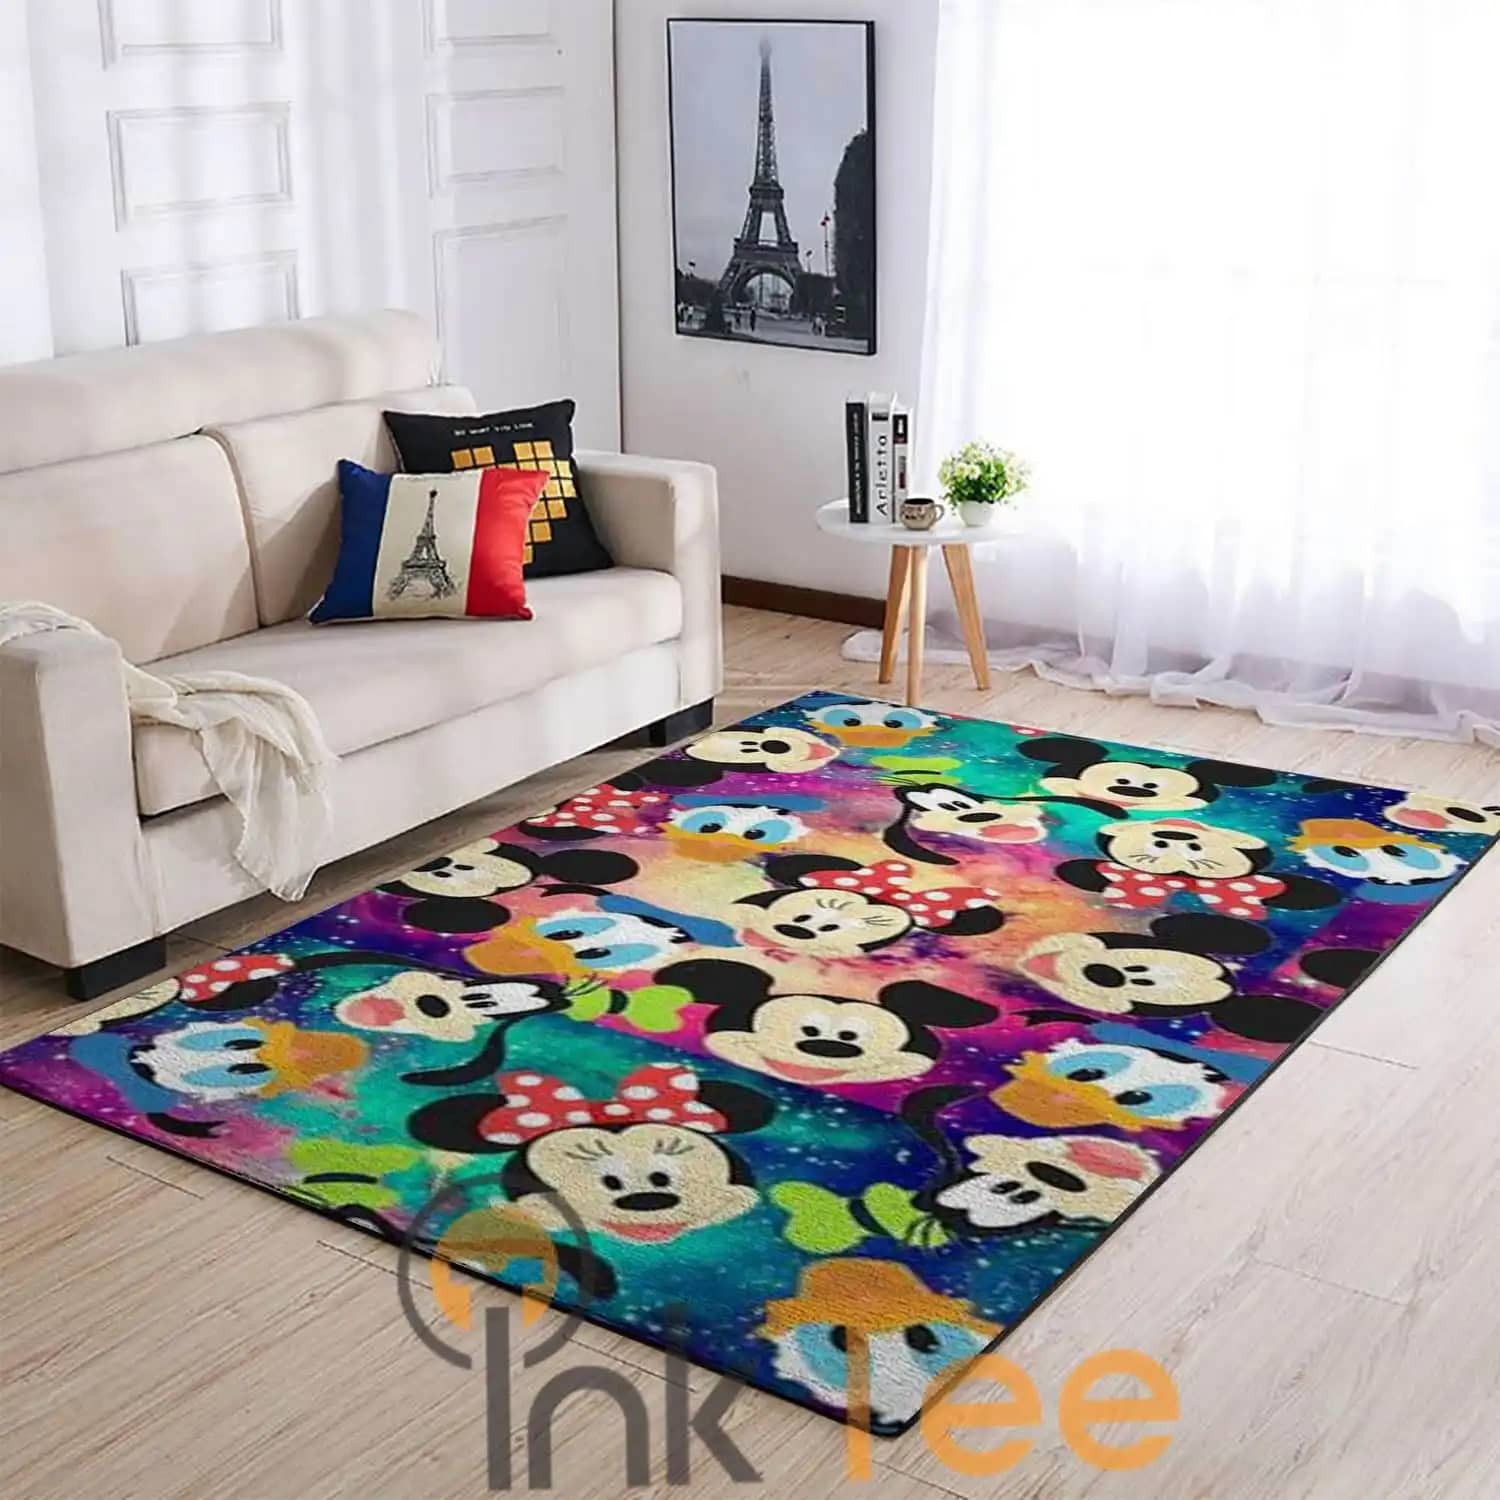 Disney Cartoon Characters Living Room Area Amazon 4104 Rug